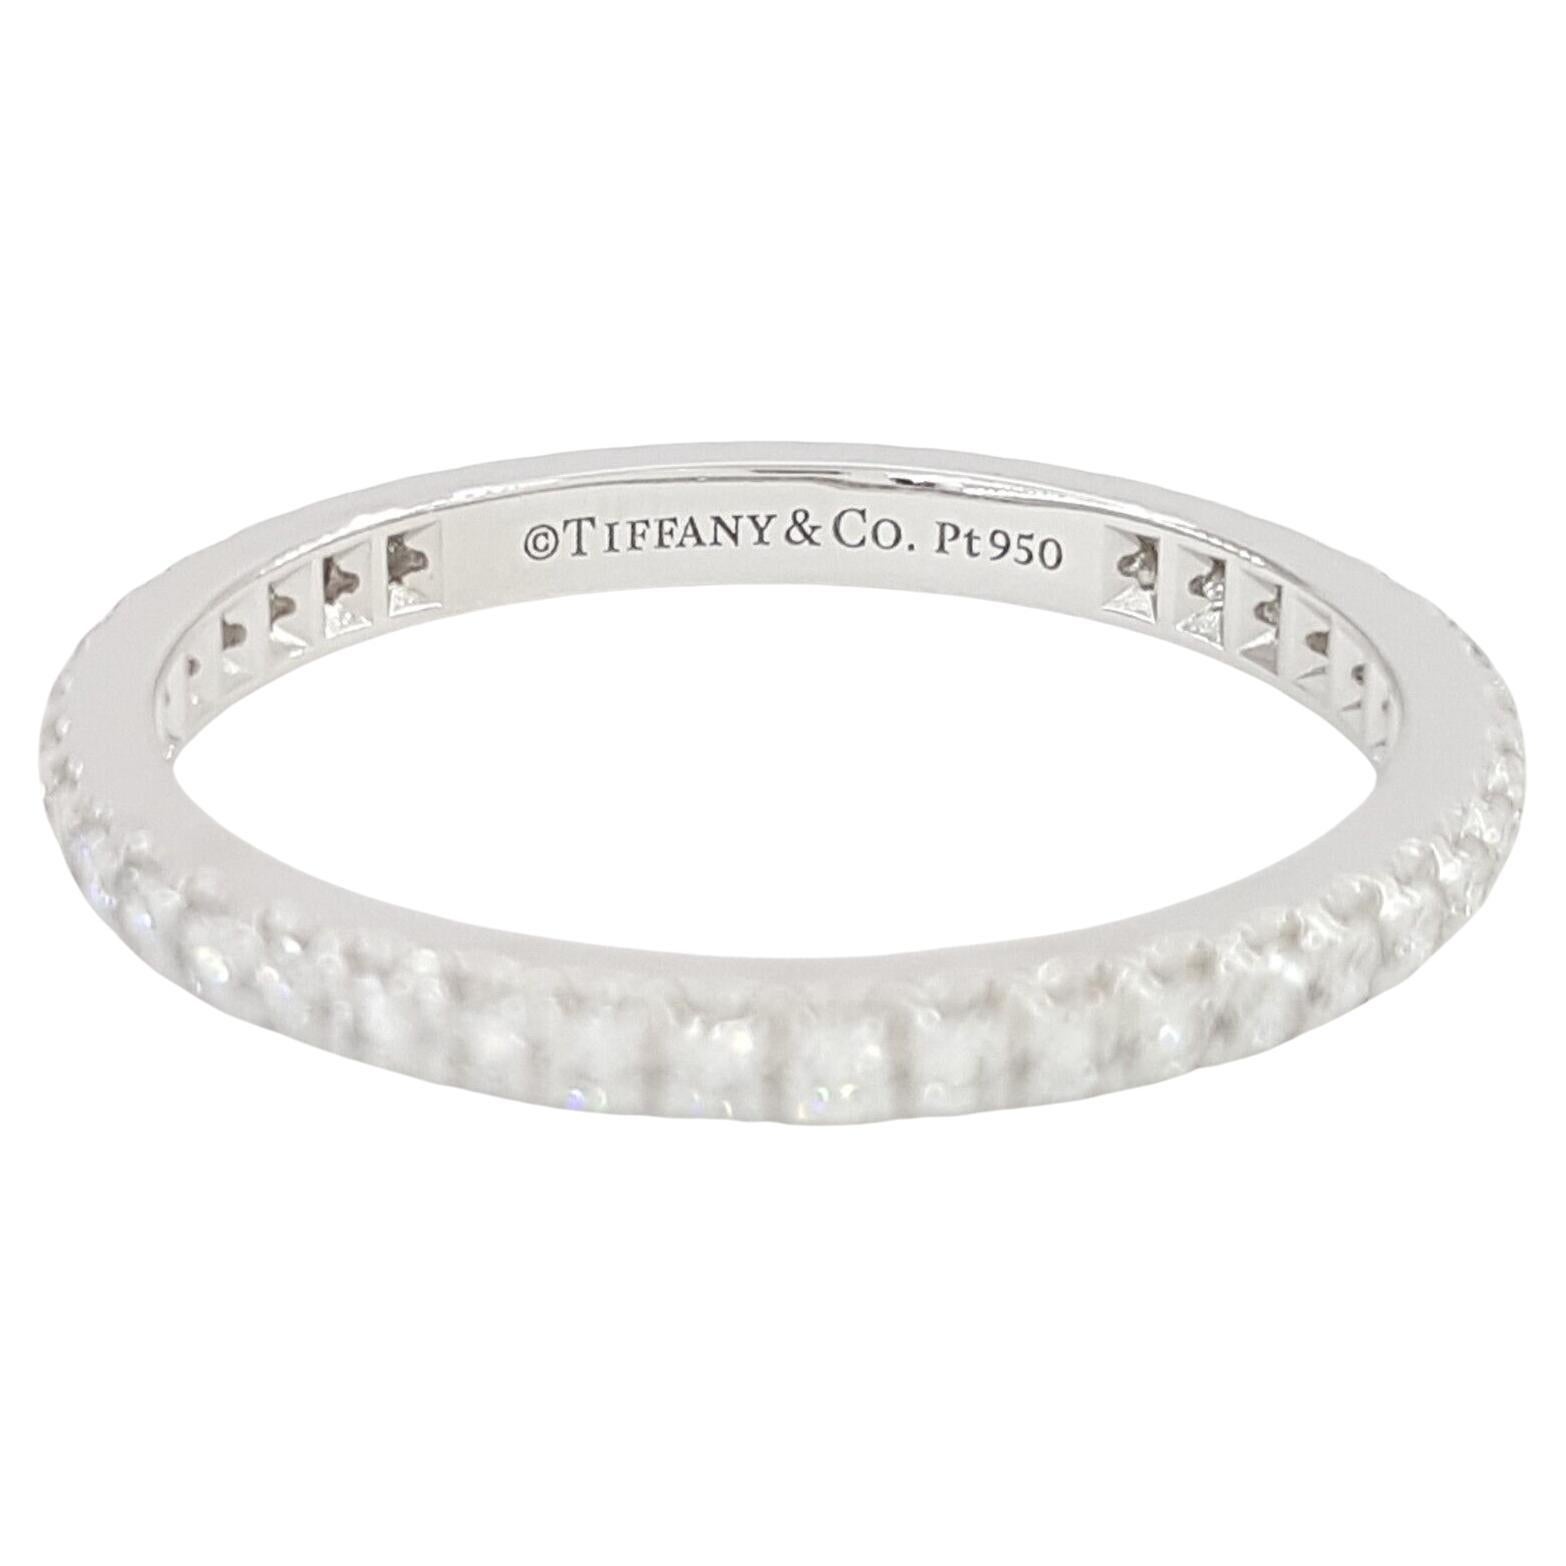 Tiffany & Co.  Round Brilliant Cut Diamonds Eternity Band Ring